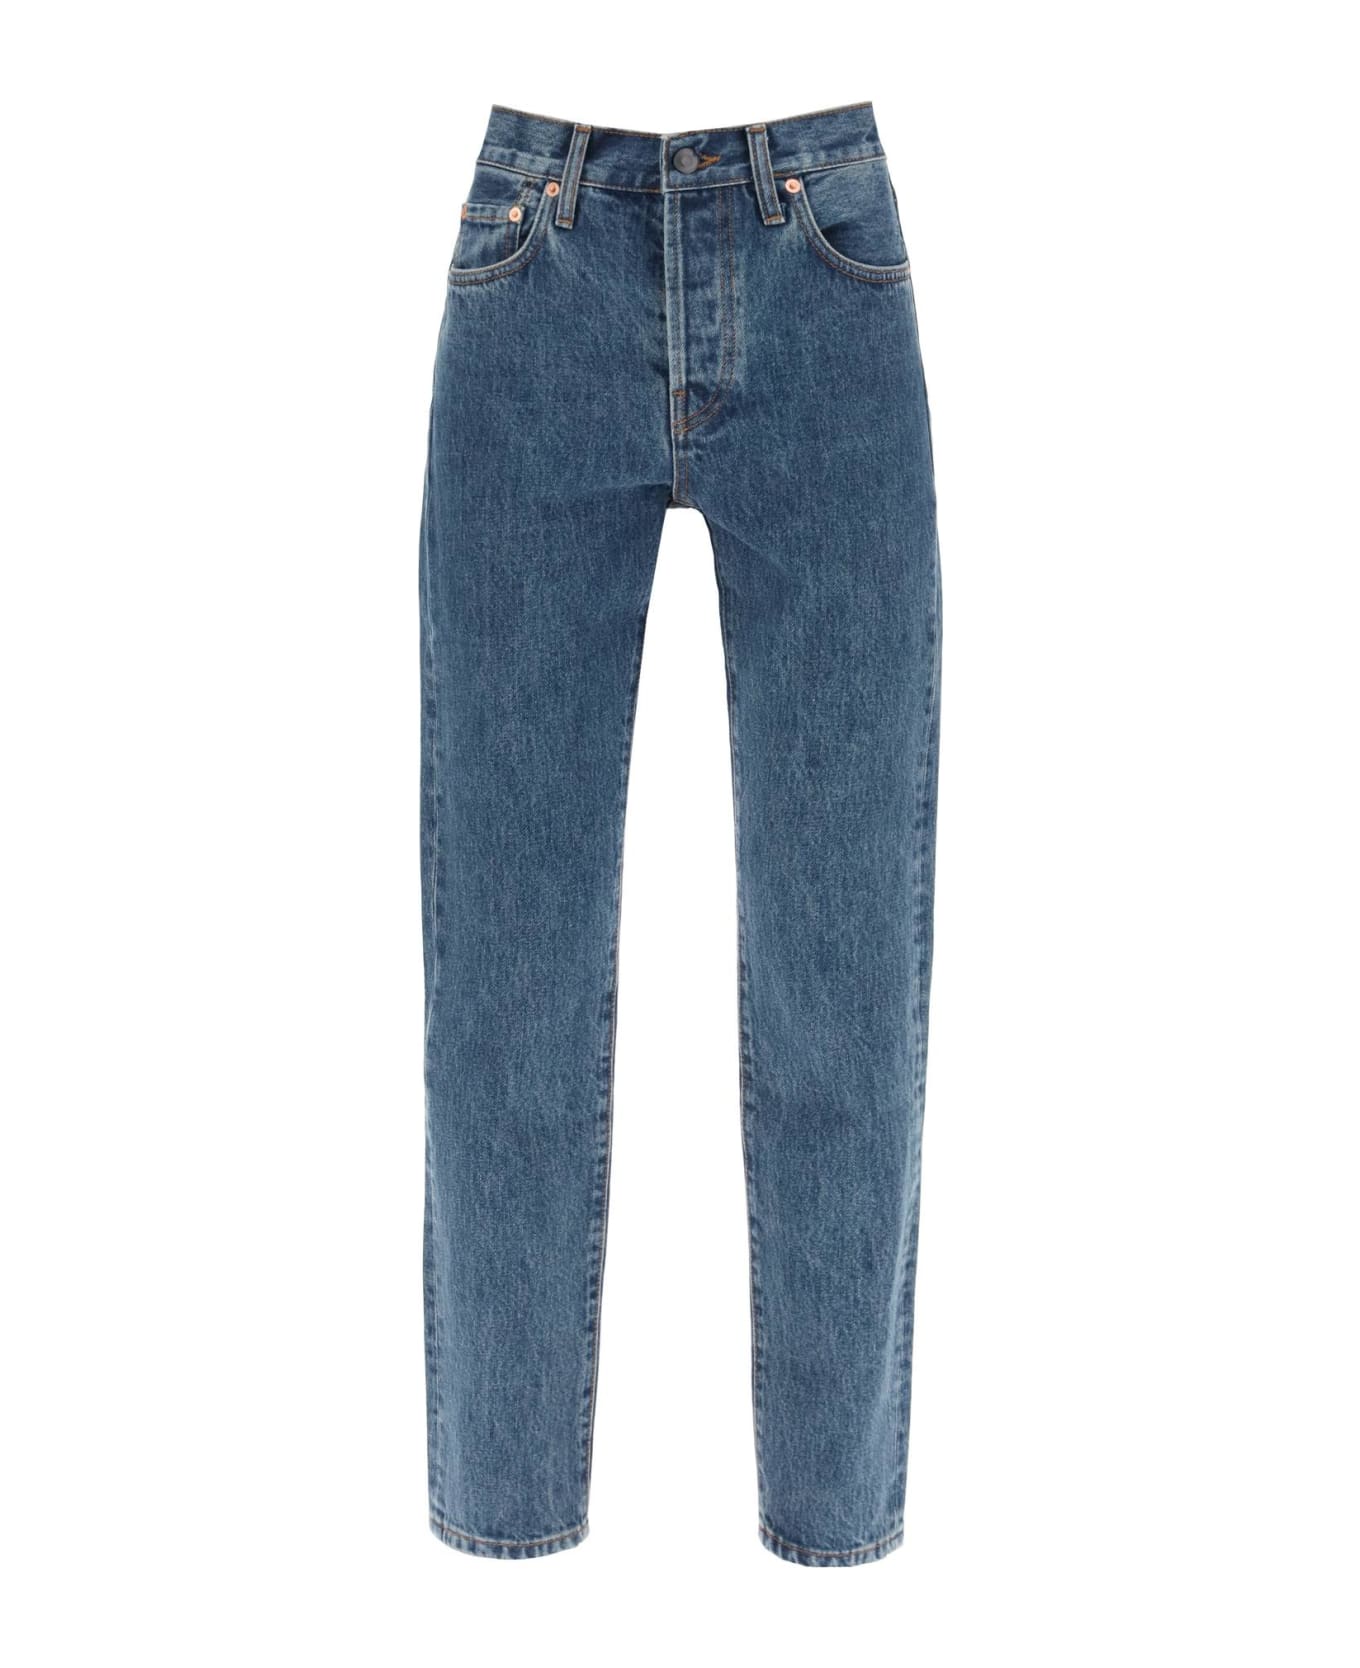 WARDROBE.NYC Slim Jeans With Acid Wash - INDIGO (Blue) デニム